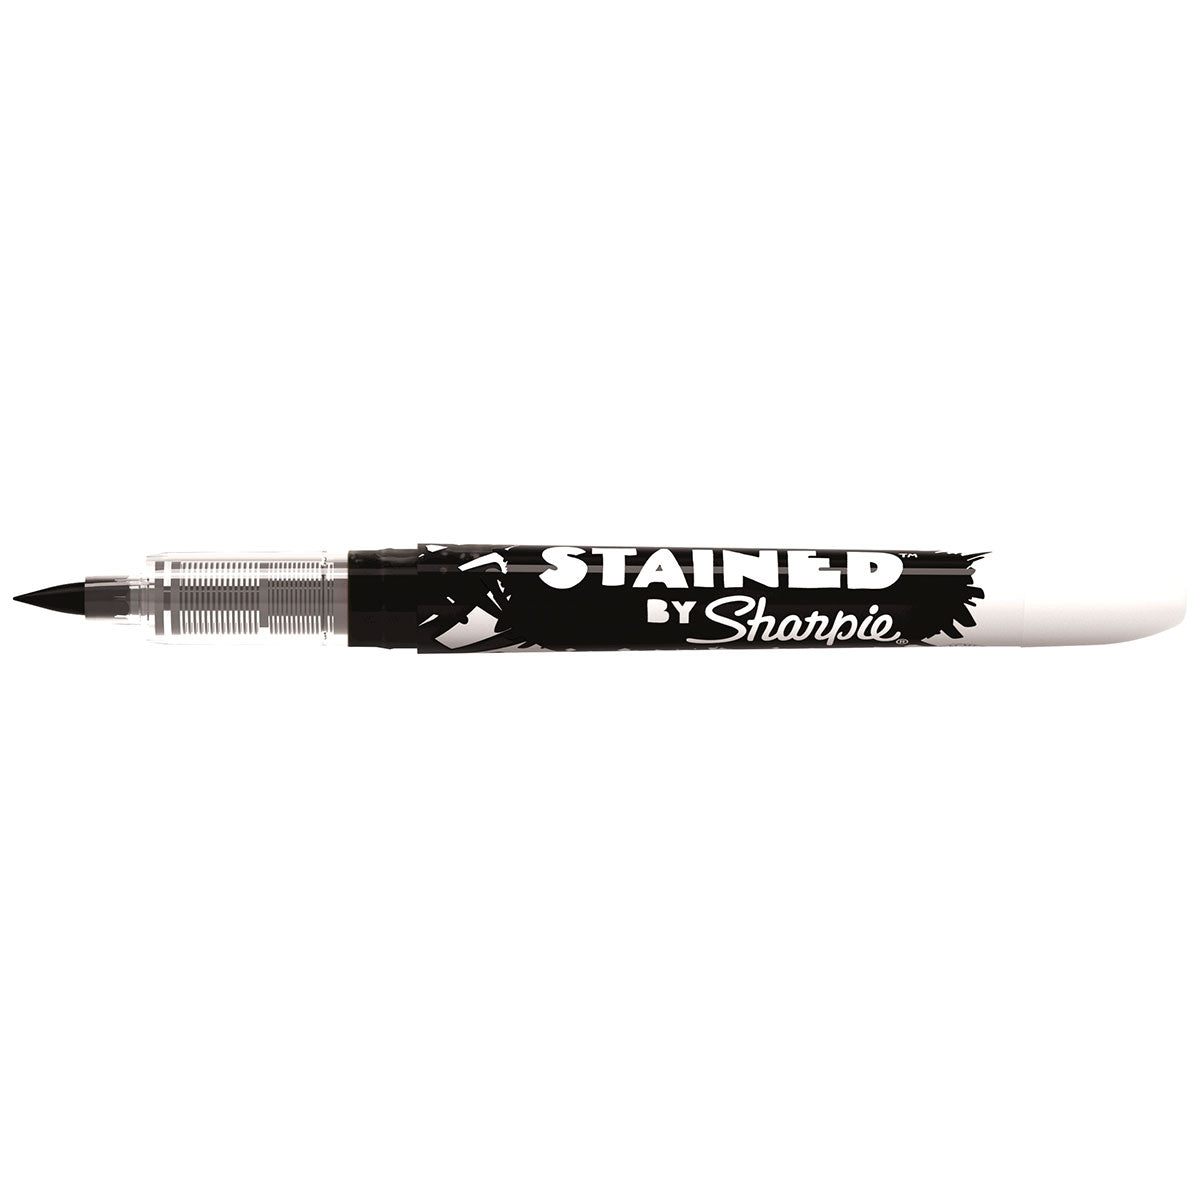 Sharpie Black Fabric Marker, Brush Tip, Stained By Sharpie  Sharpie Fabric Markers